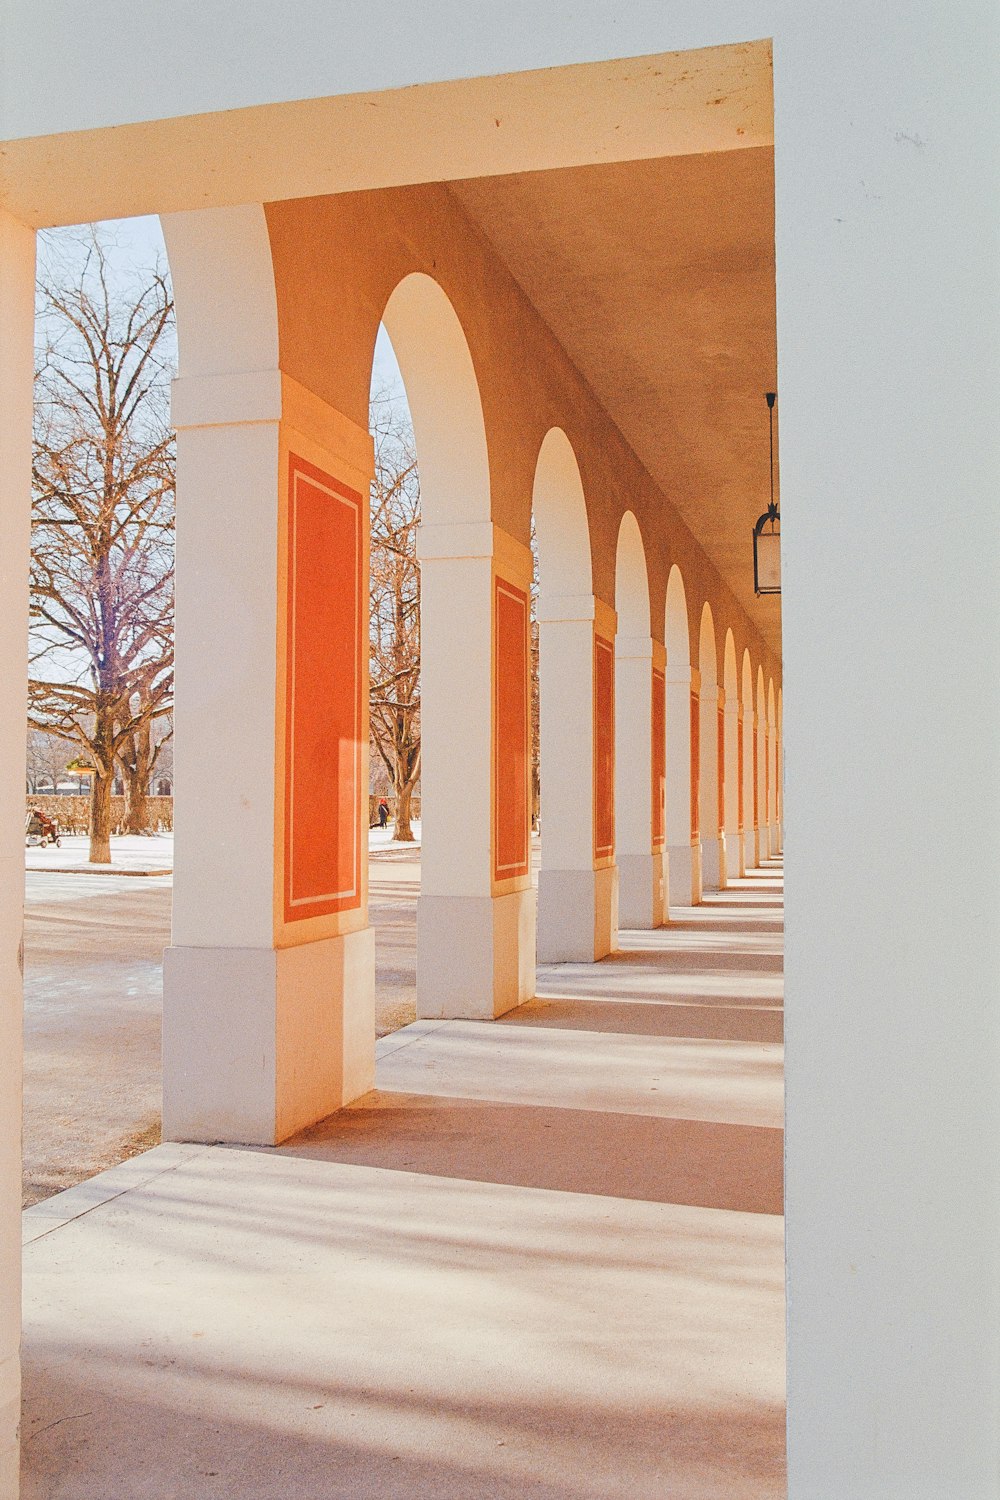 a row of white pillars with orange doors